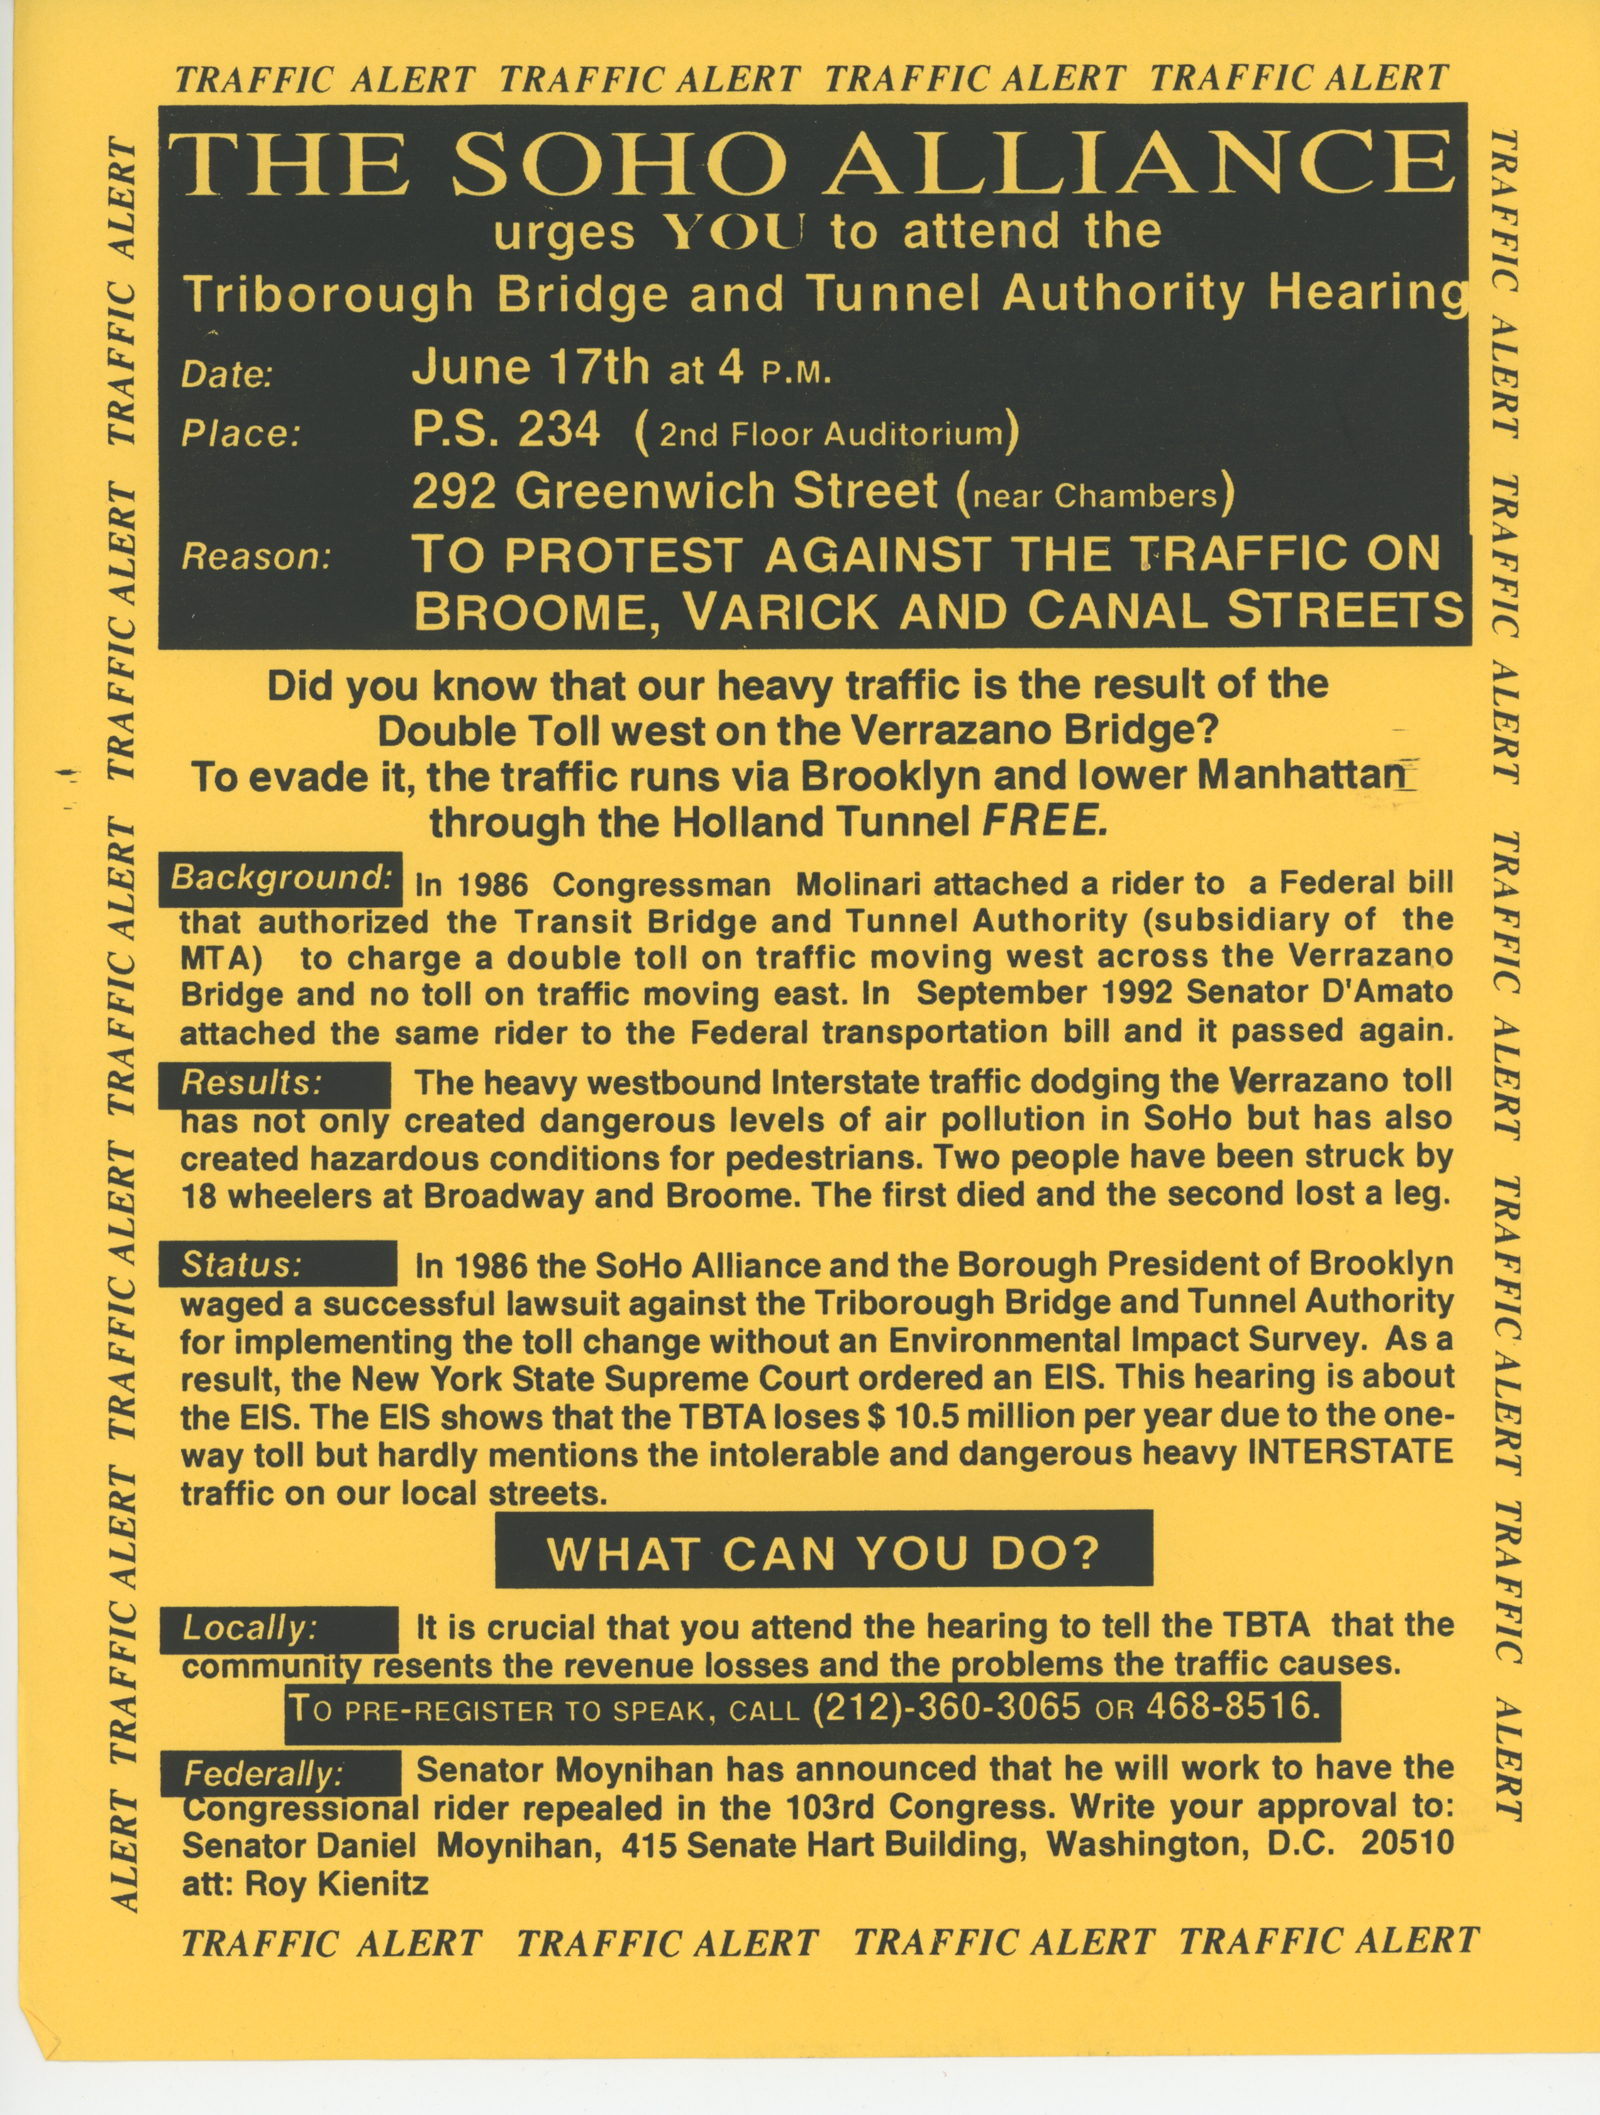 SoHo Alliance Triborough Bridge Hearing Flyer (n.d.)